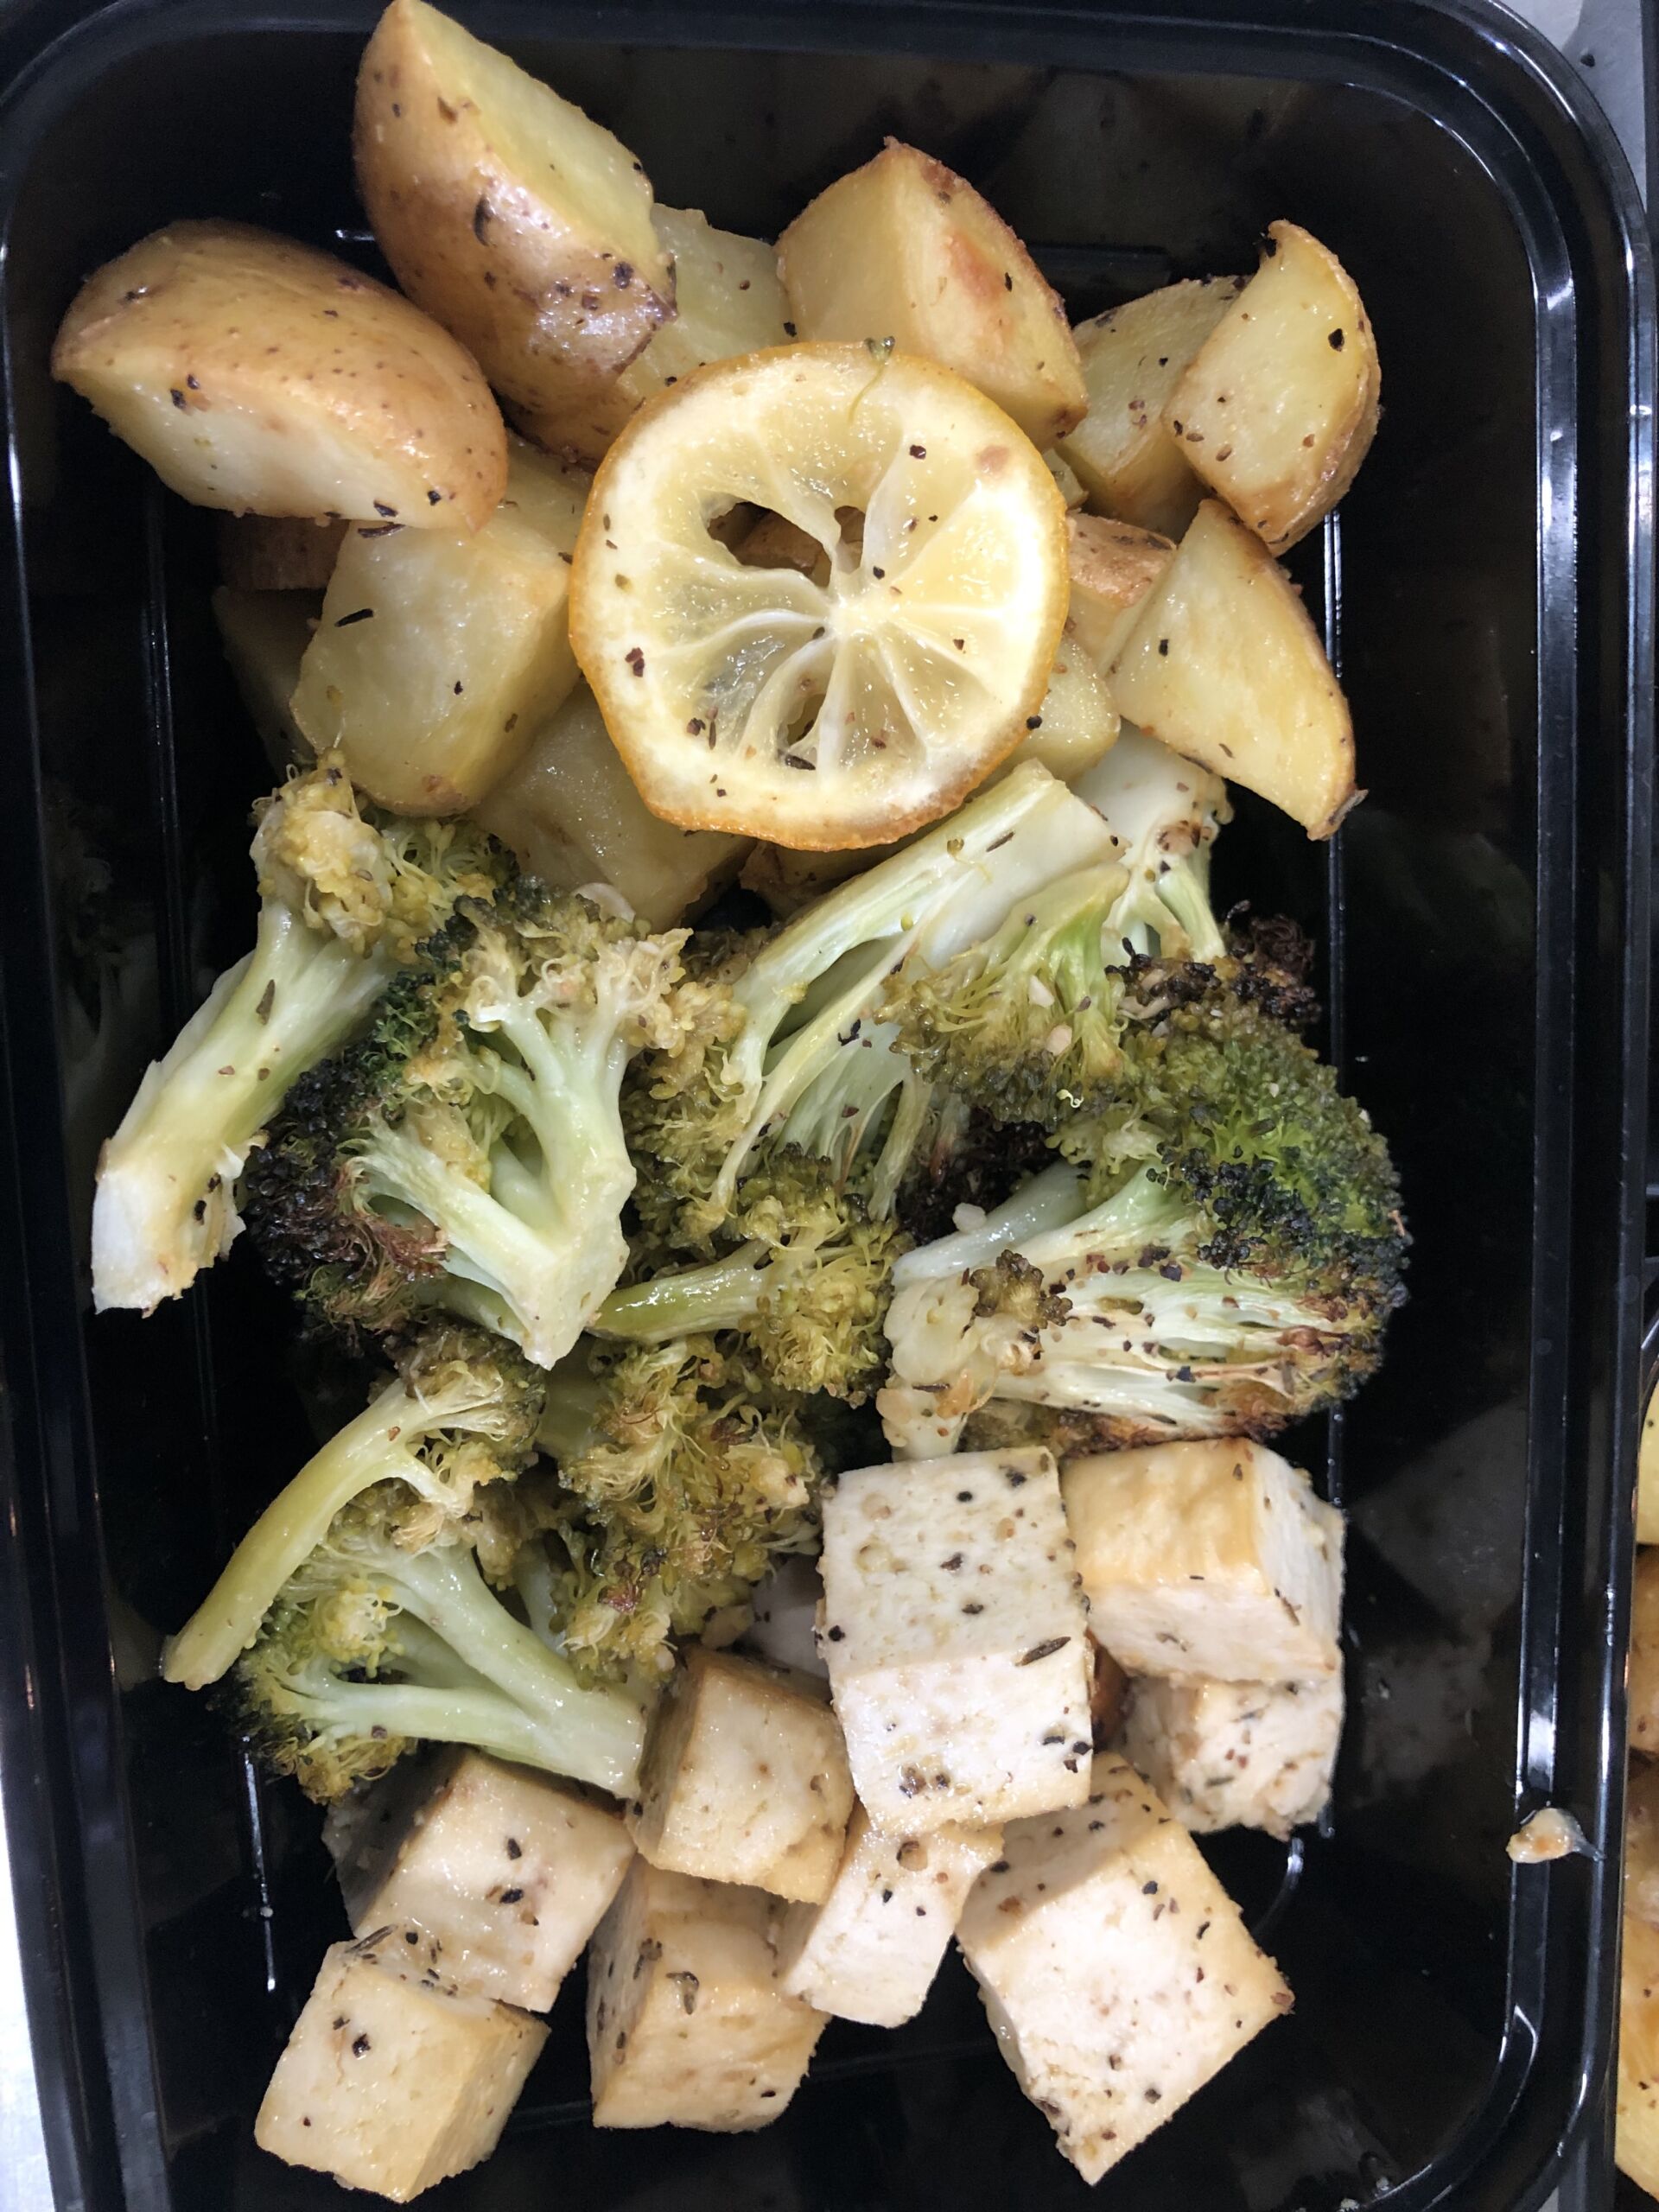 Tofu and broccoli in box